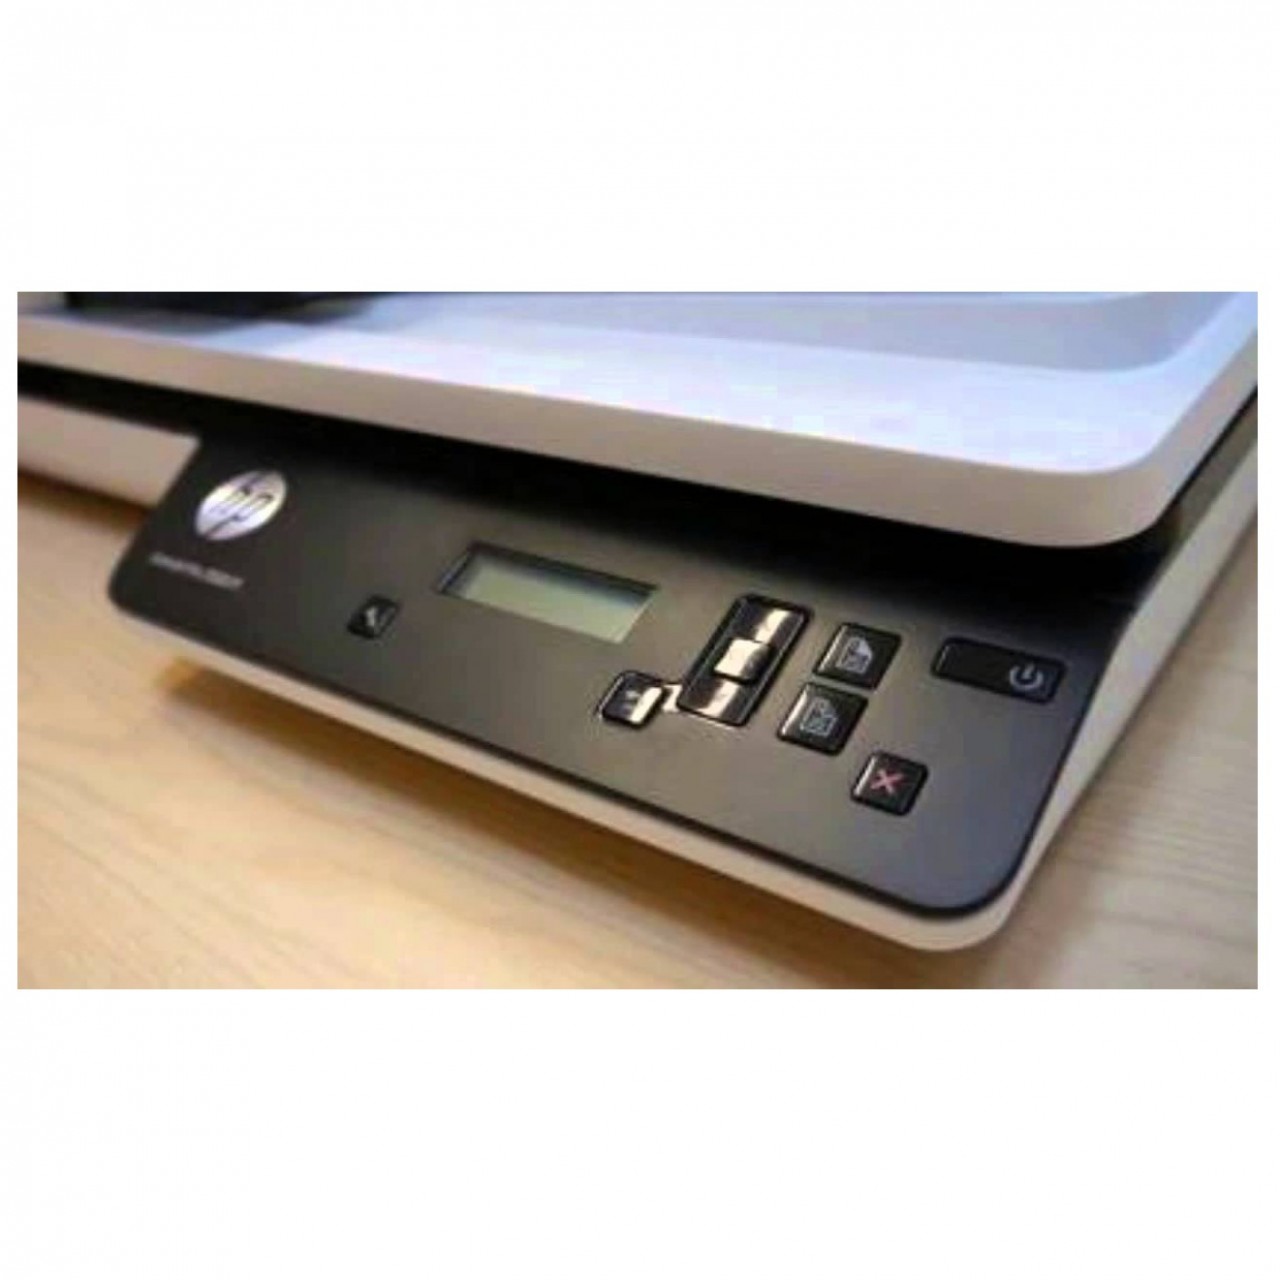 HP Pro ScanJet 2500 F1 Scanner – Flatbed– 1200 dpi color resolution - 5 Buttons Control